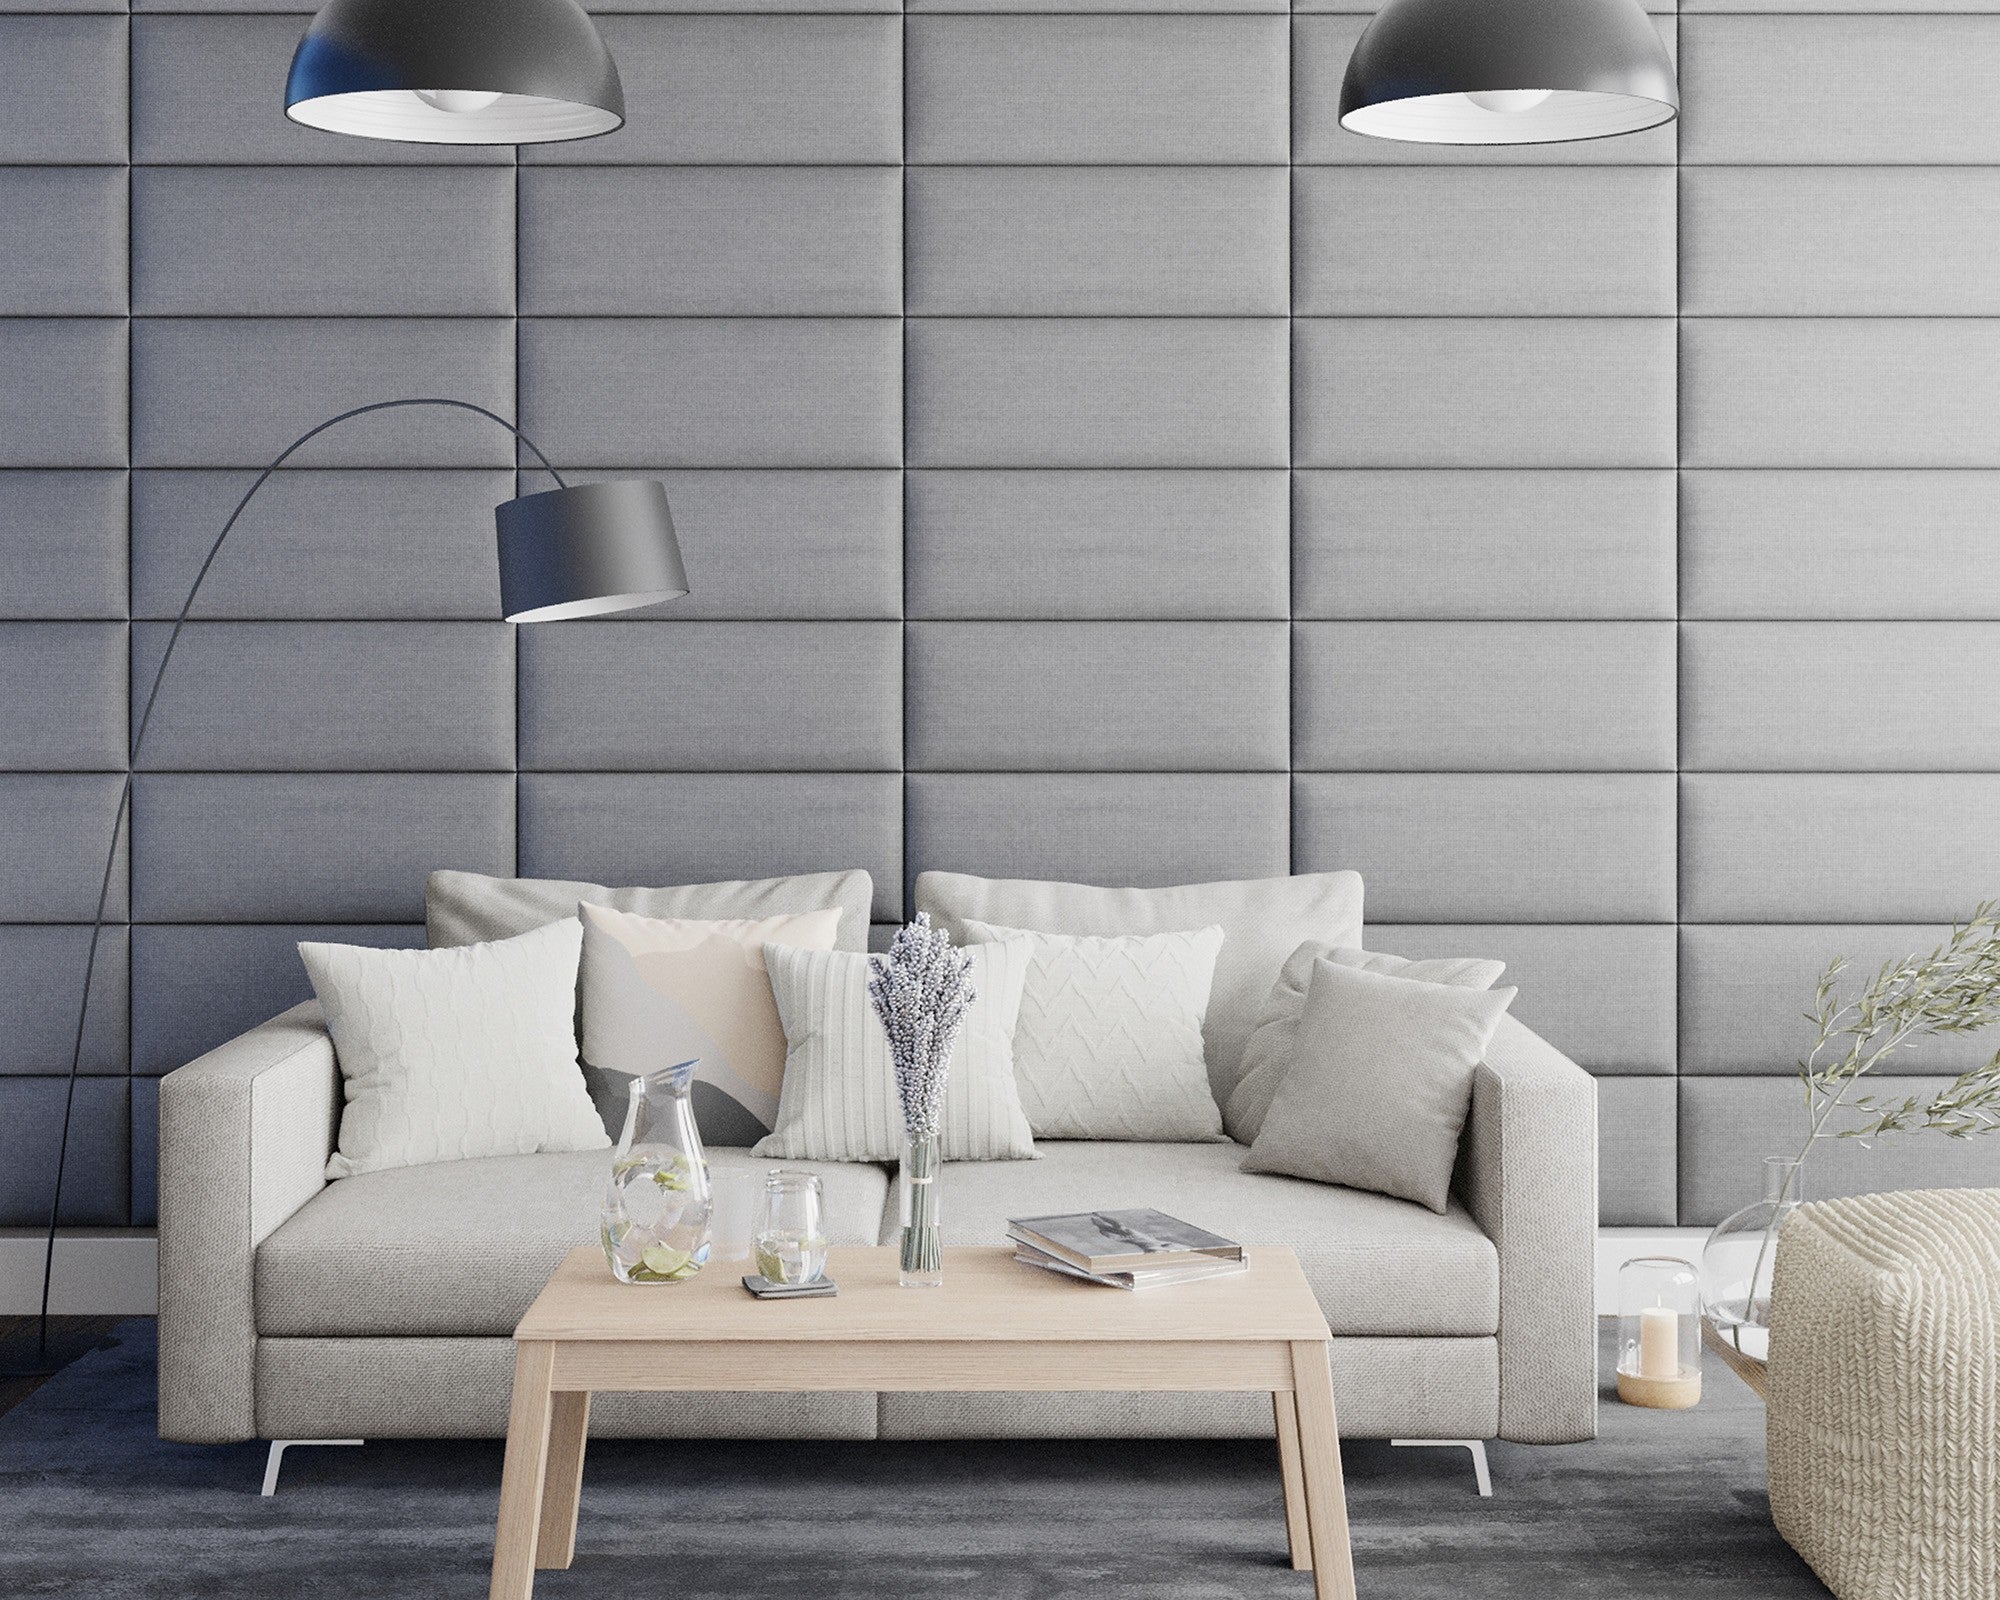 Aspire EasyMount Wall Mounted Upholstered Panels - Modular DIY Headboard - Eire Linen - Grey